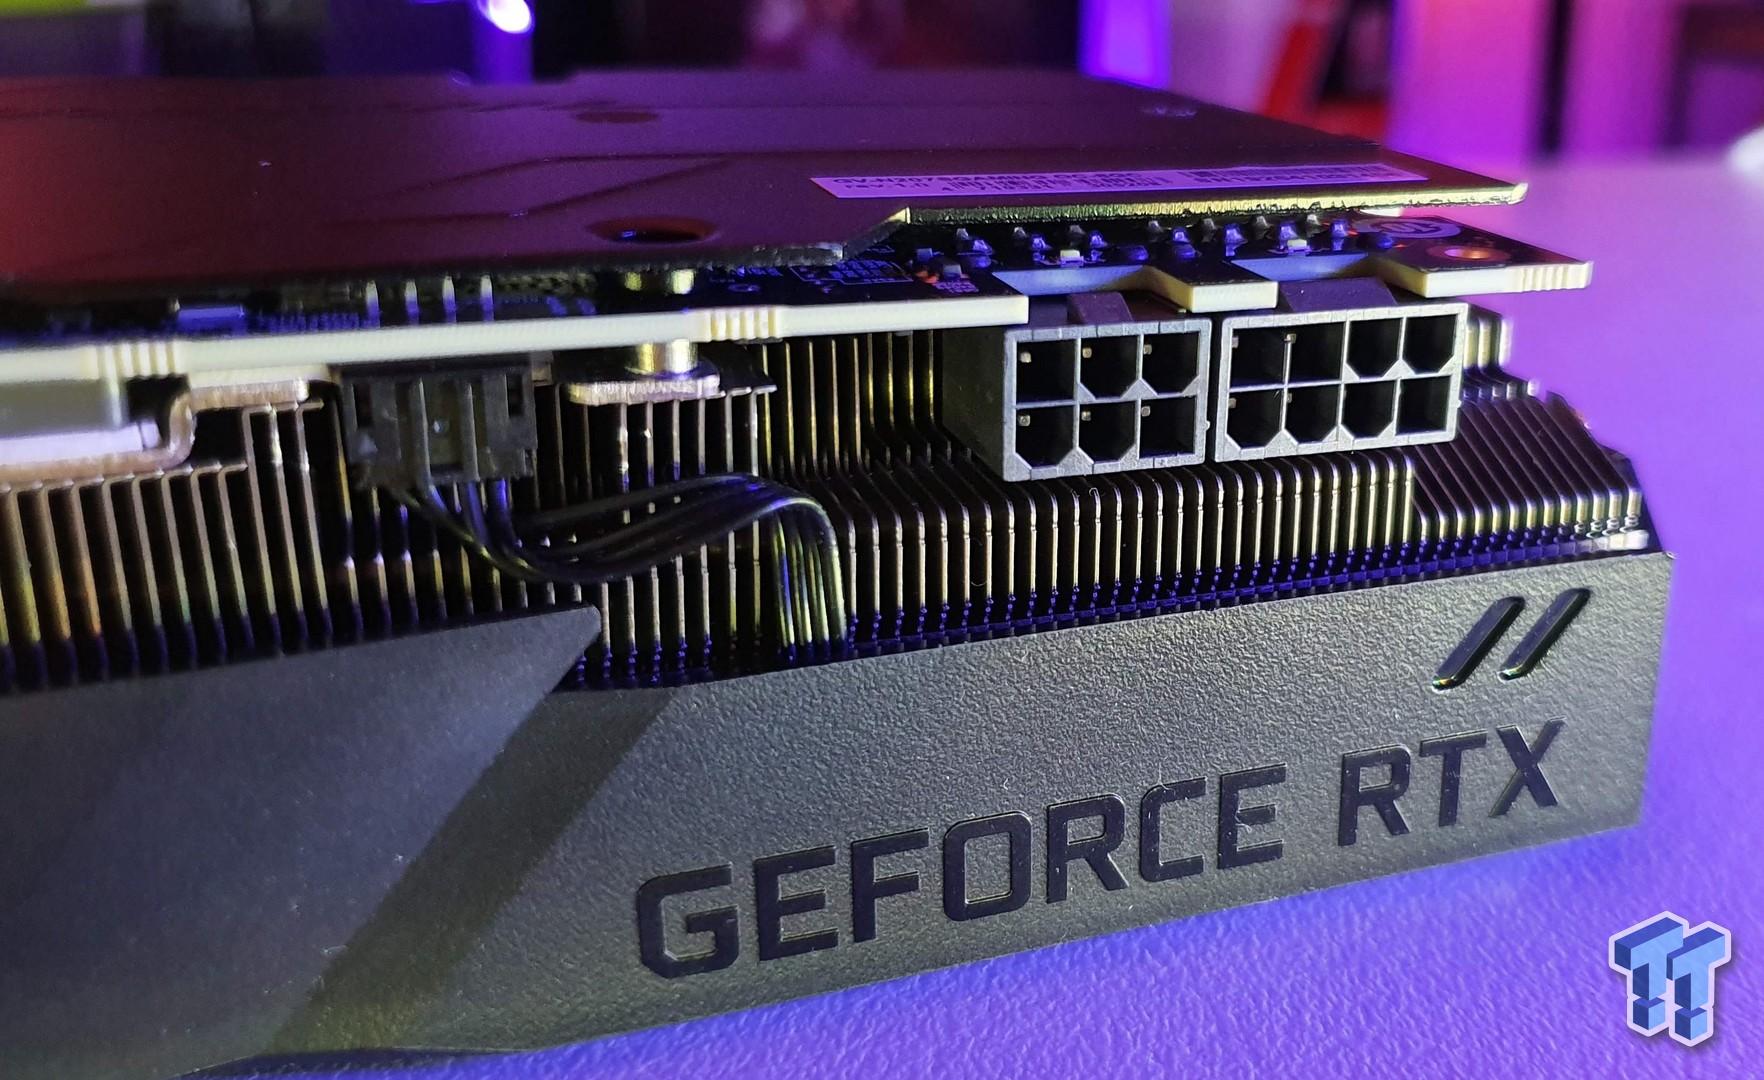 GIGABYTE GeForce RTX 2070 SUPER GAMING OC Review